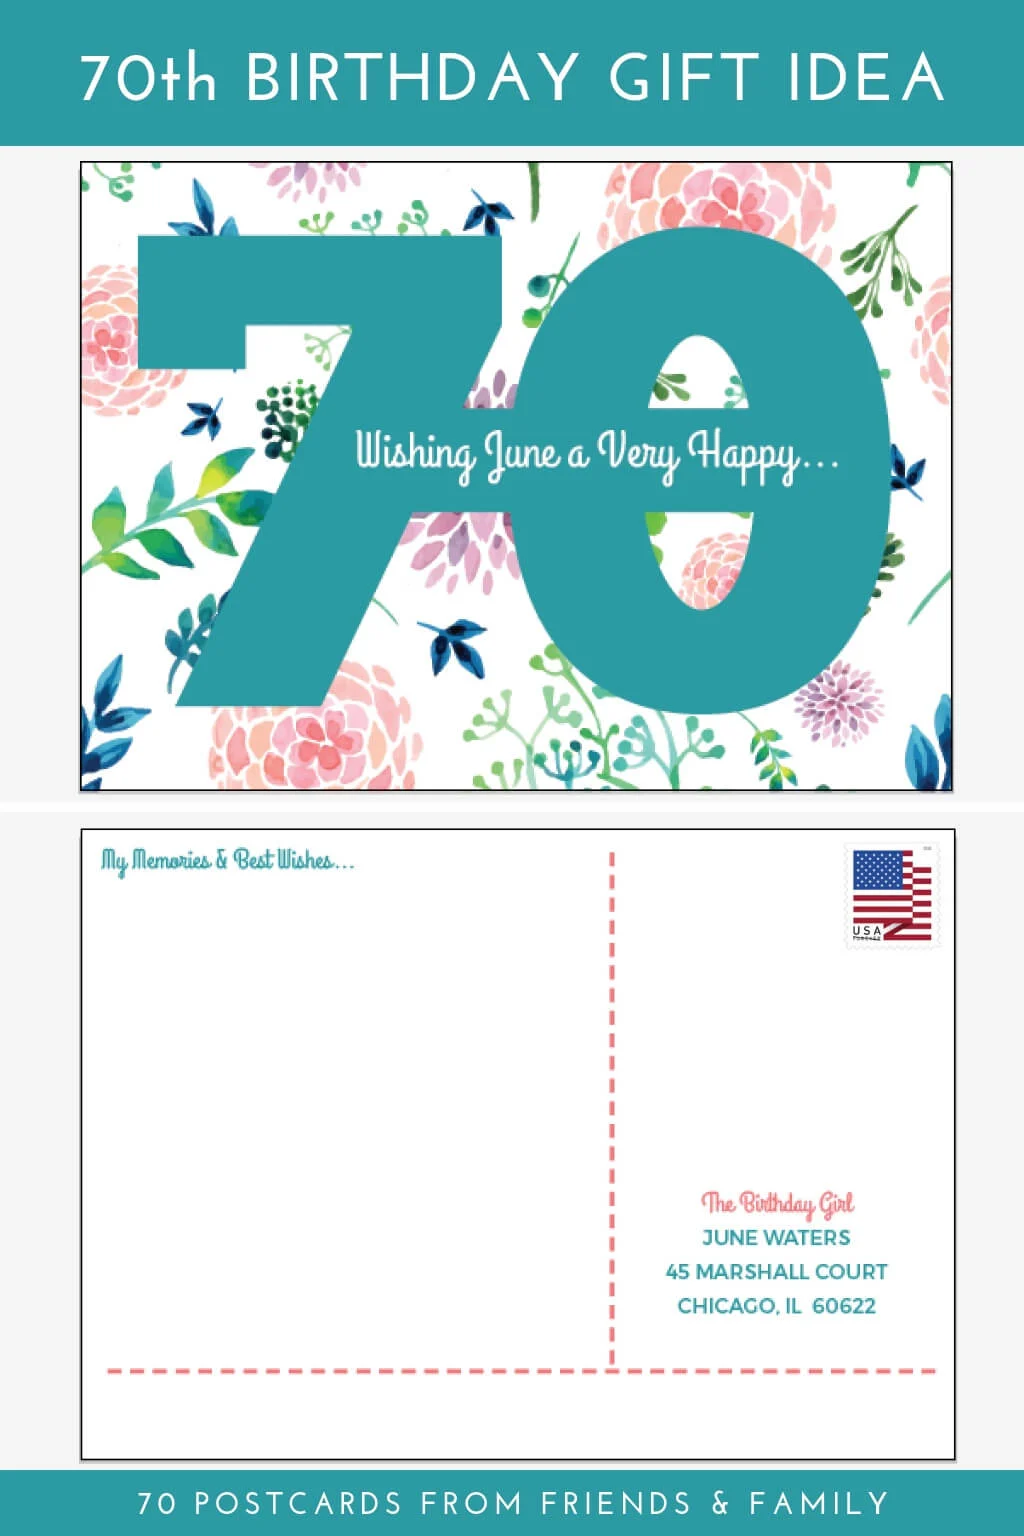 70th birthday postcards gift idea